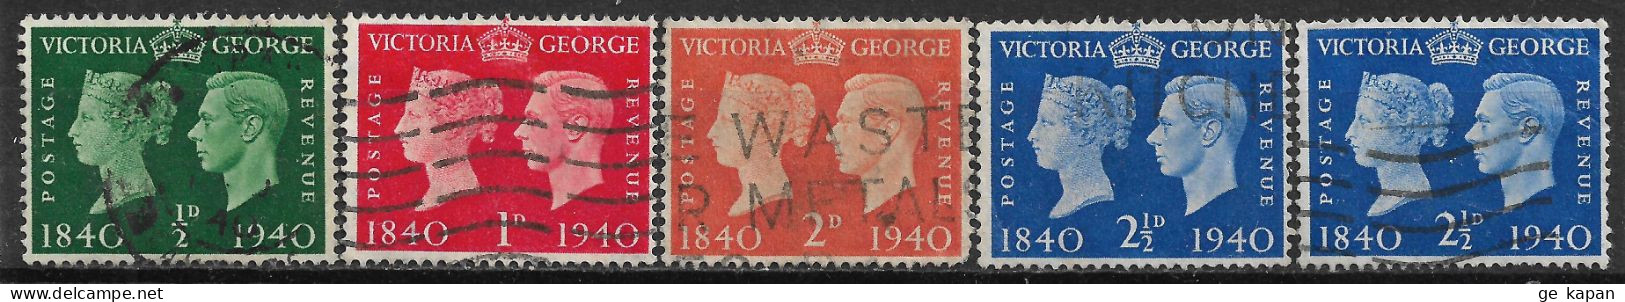 1940 GREAT BRITAIN Set Of 5 Used Stamps (Scott # 252,253,255,256) CV $2.60 - Gebruikt